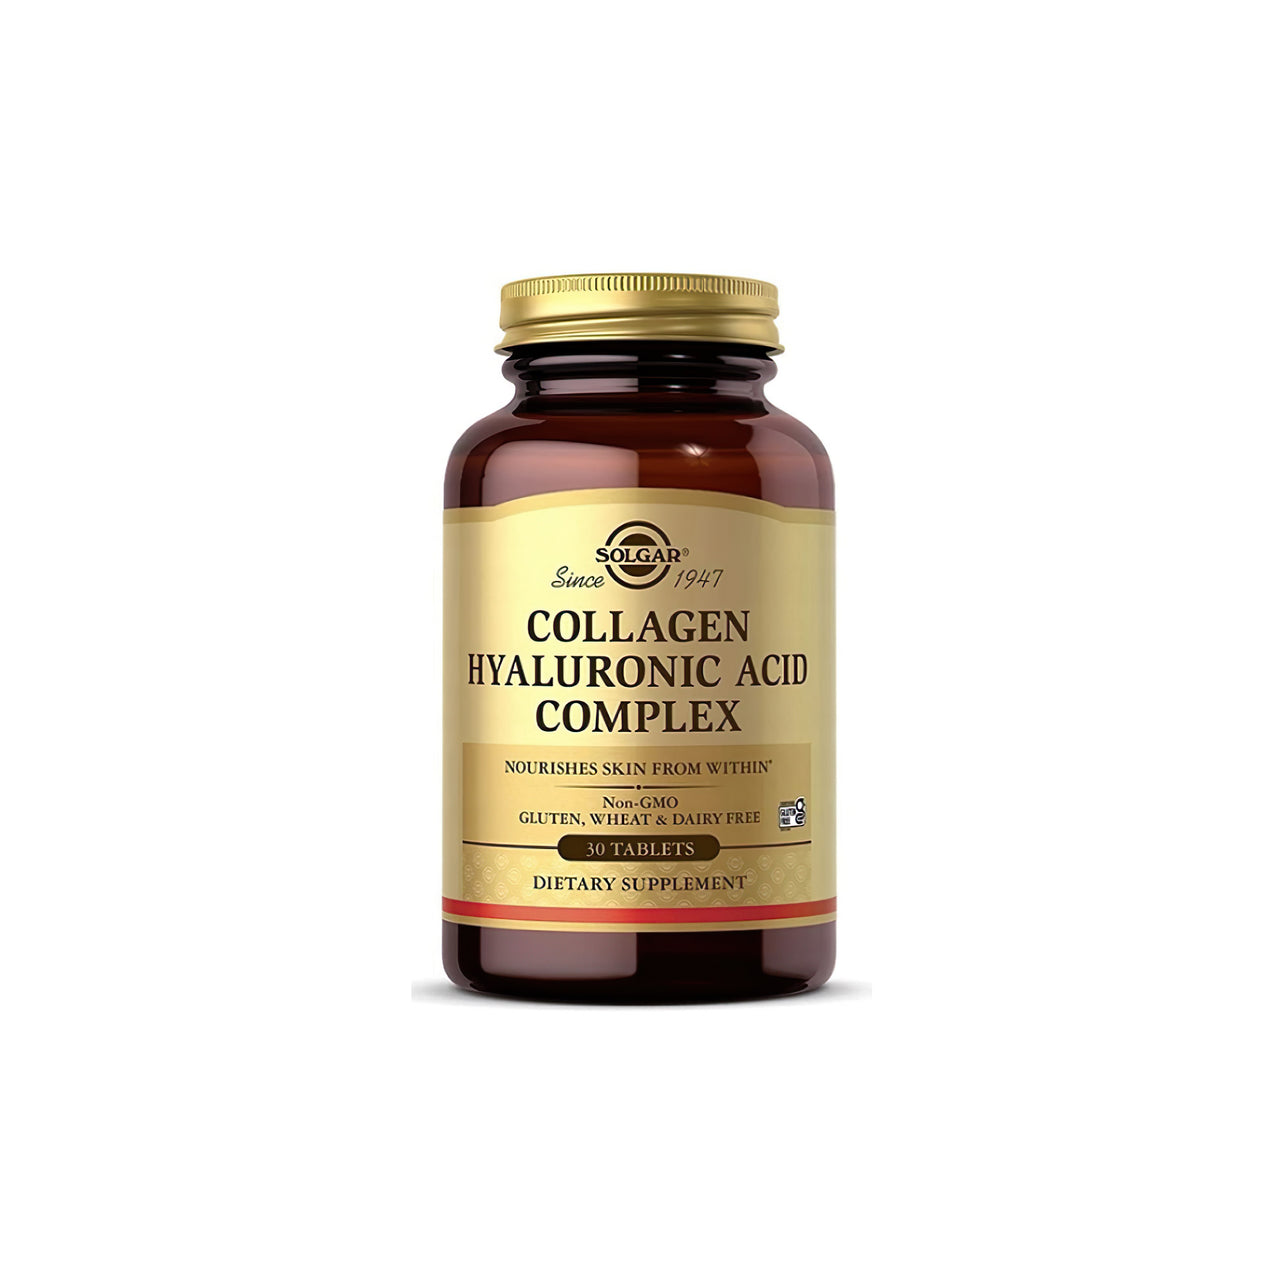 Um frasco de Solgar collagen hyaluronic acid complex.